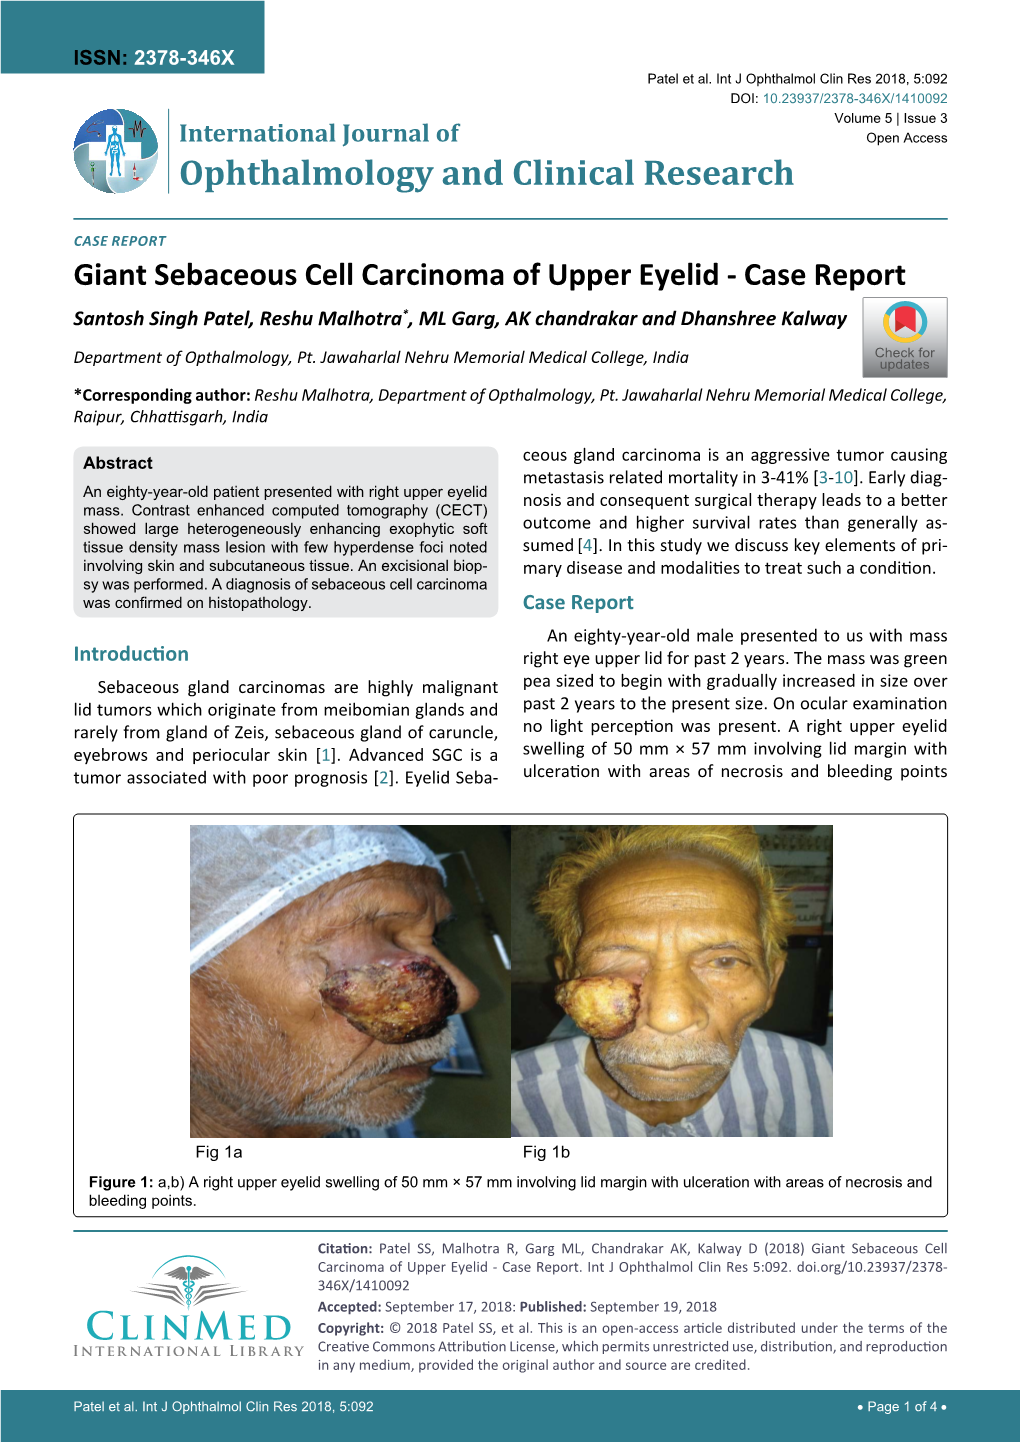 Giant Sebaceous Cell Carcinoma of Upper Eyelid - Case Report Santosh Singh Patel, Reshu Malhotra*, ML Garg, AK Chandrakar and Dhanshree Kalway